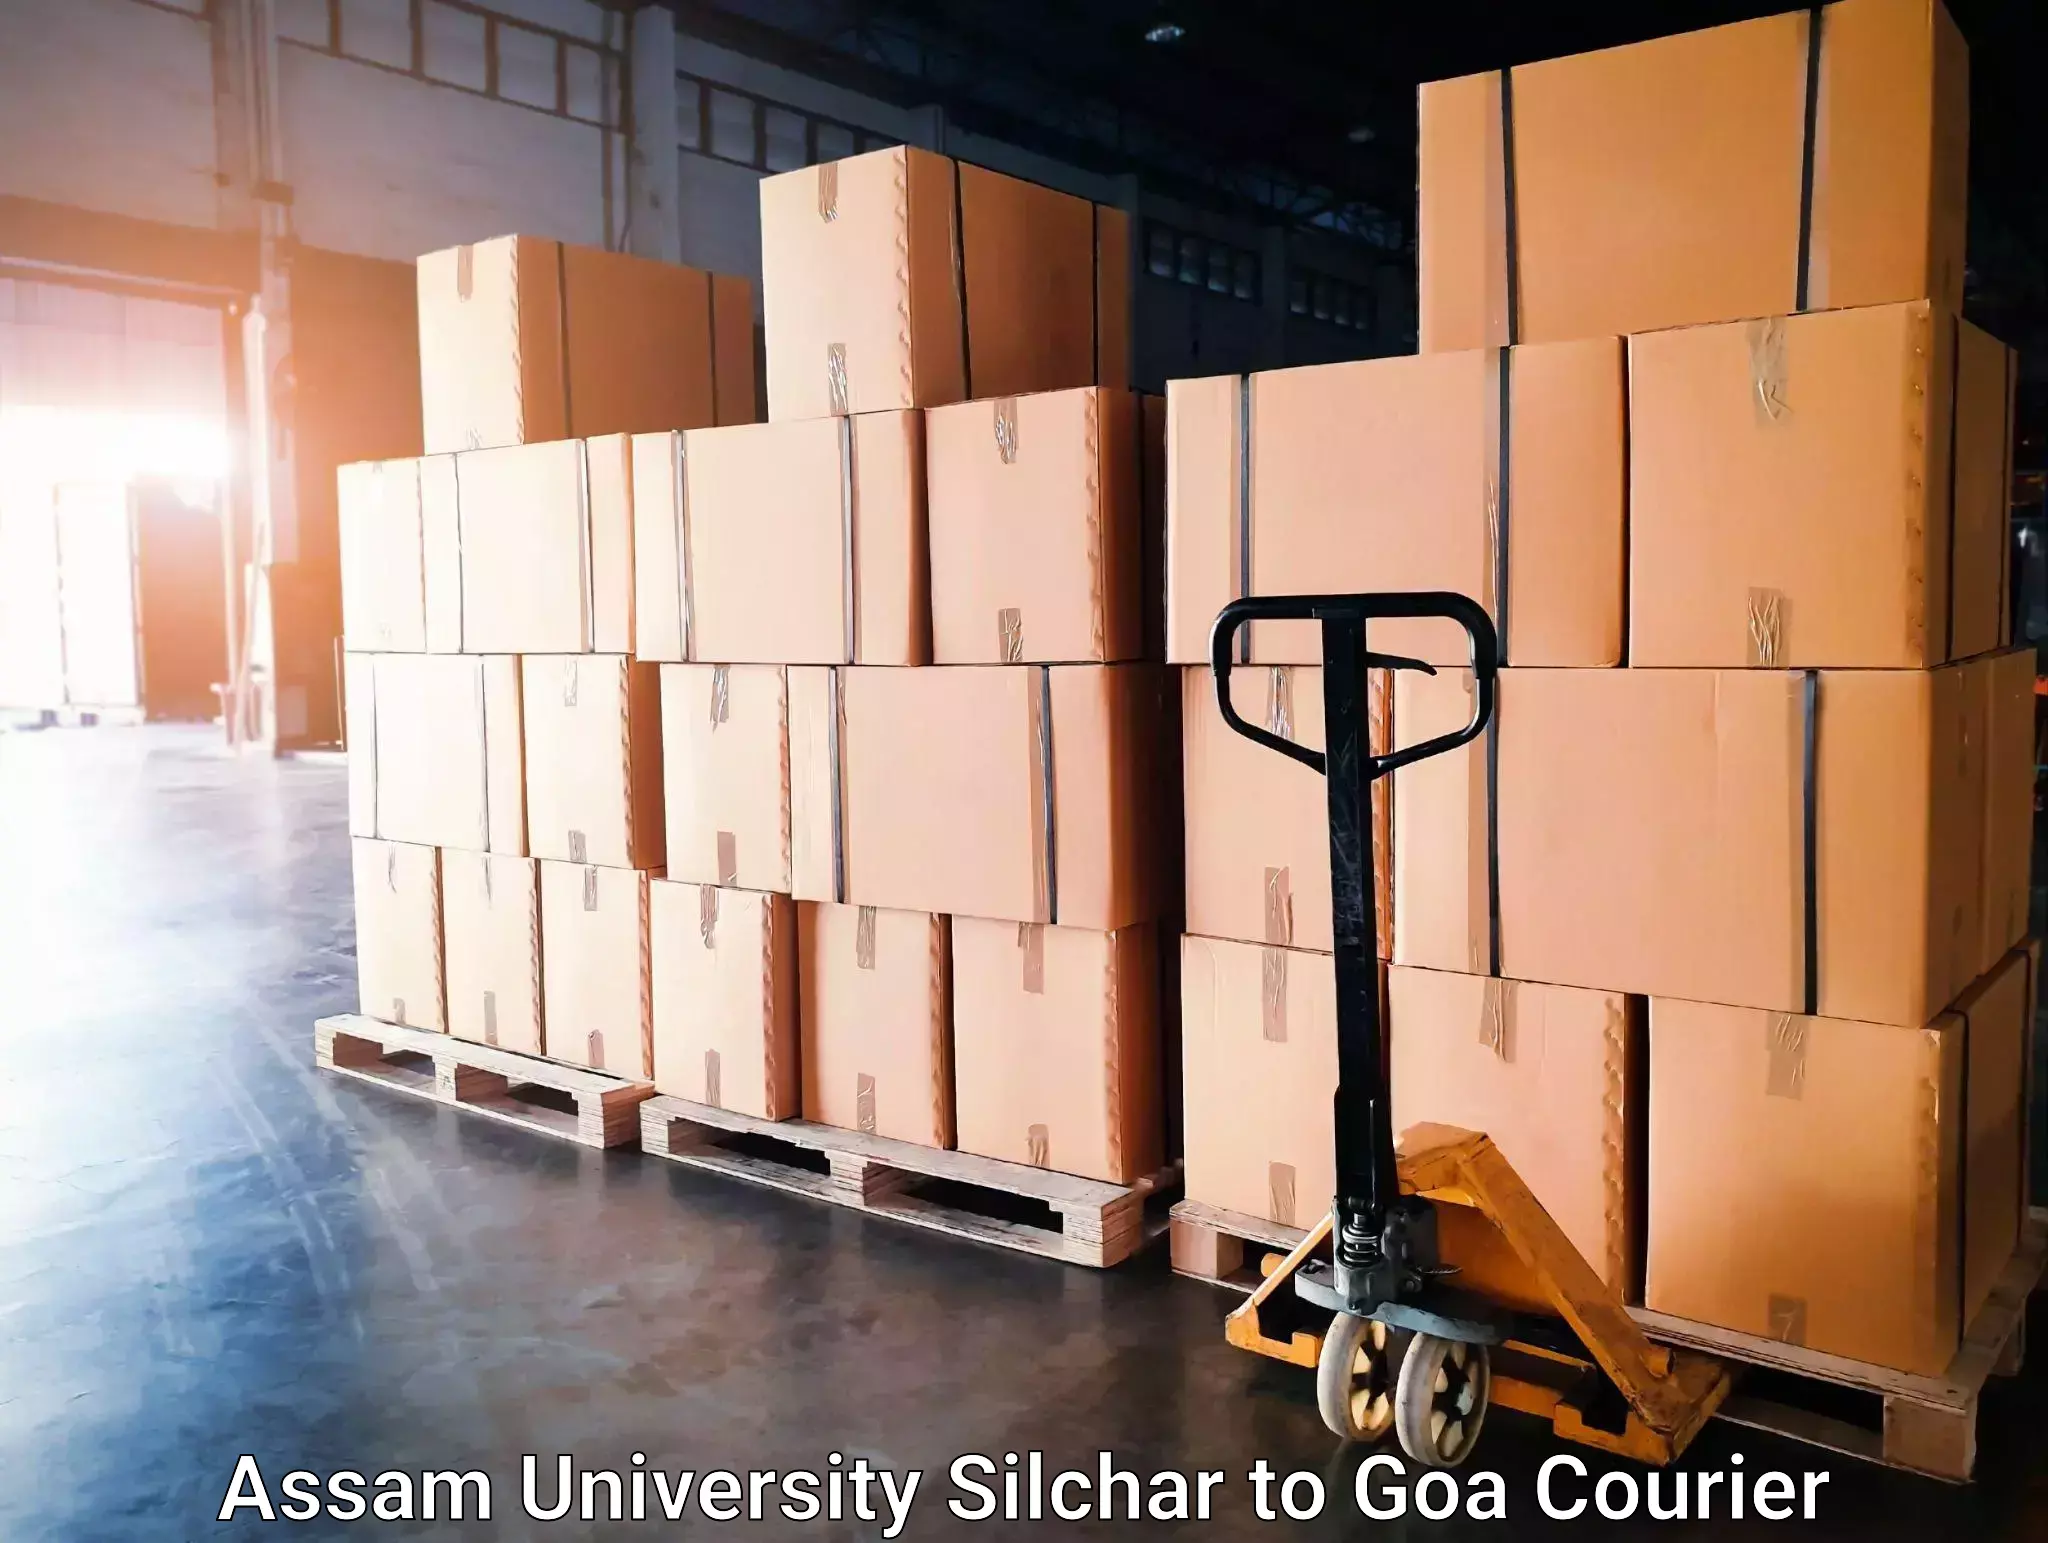 Courier service innovation Assam University Silchar to Goa